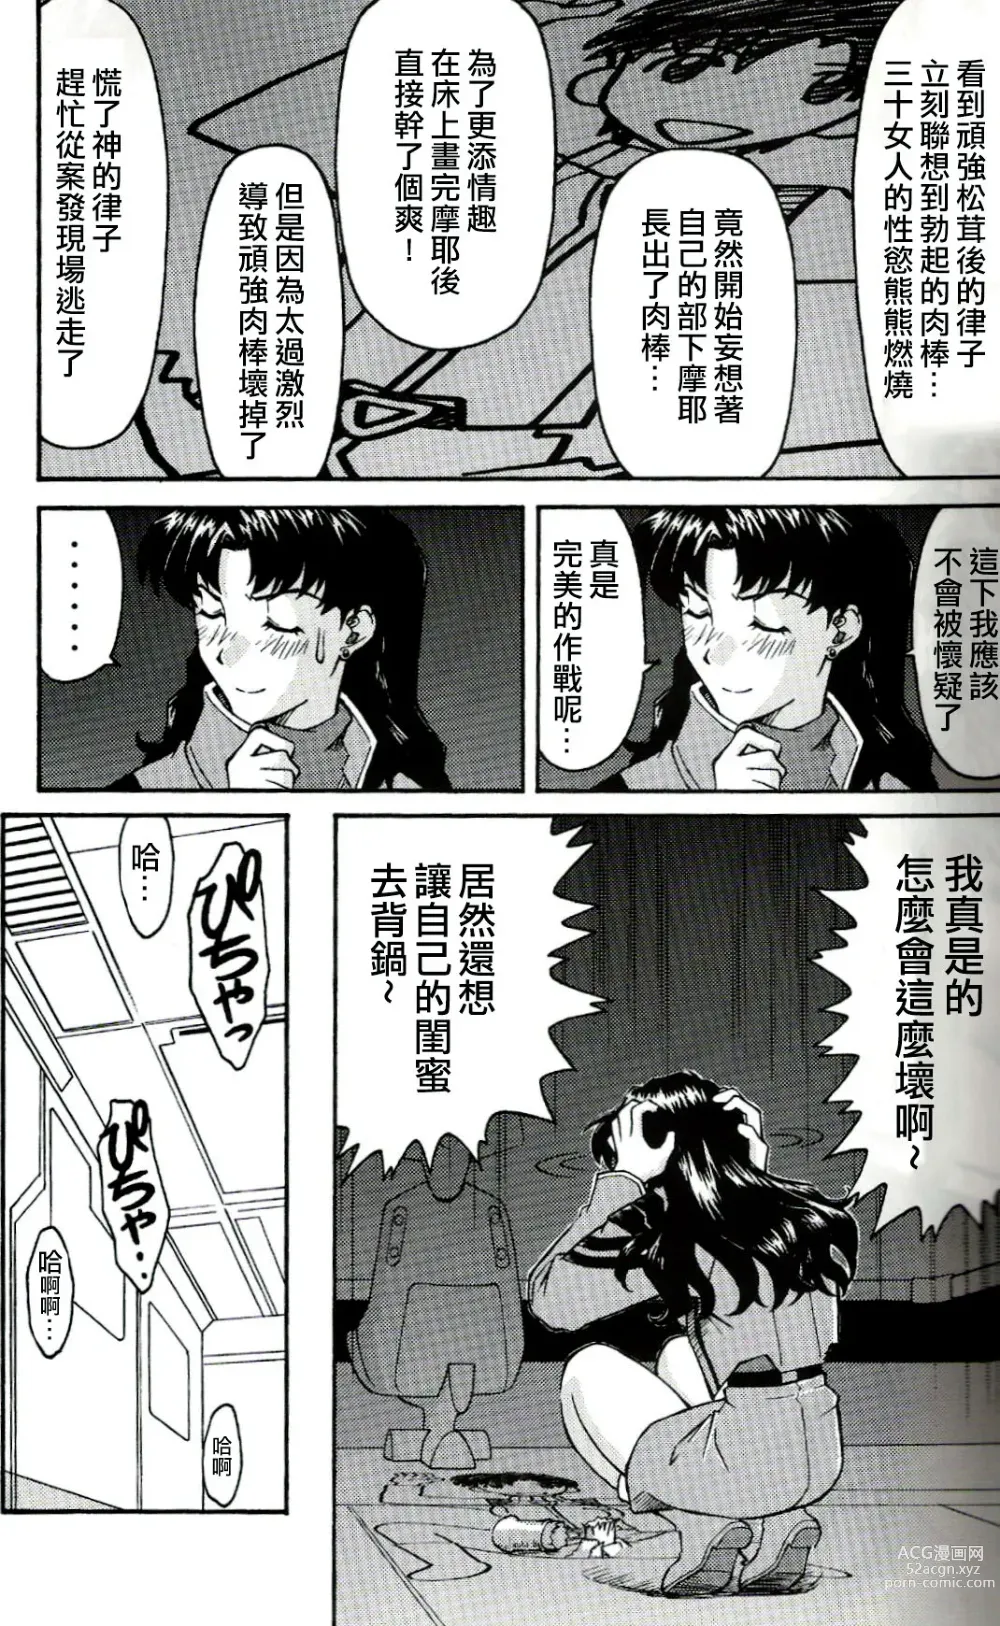 Page 25 of doujinshi A Wild Fancy